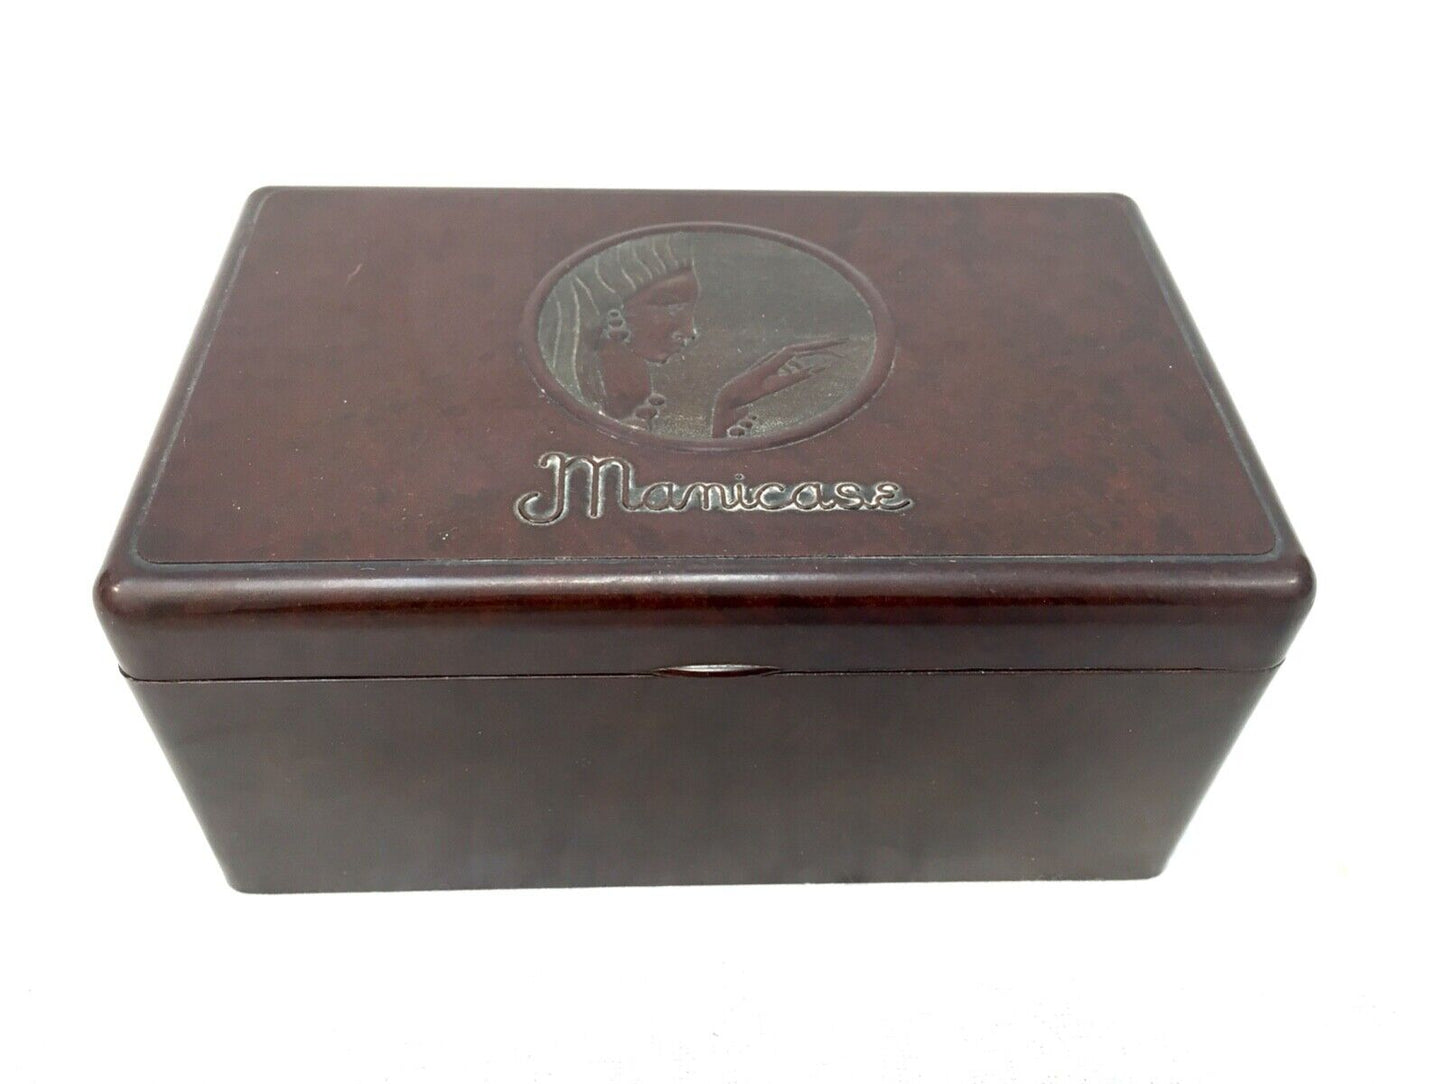 Antique Arty Deco Bakelite Ladies Manicure Set Box / Manicase by Manex Ltd c1930